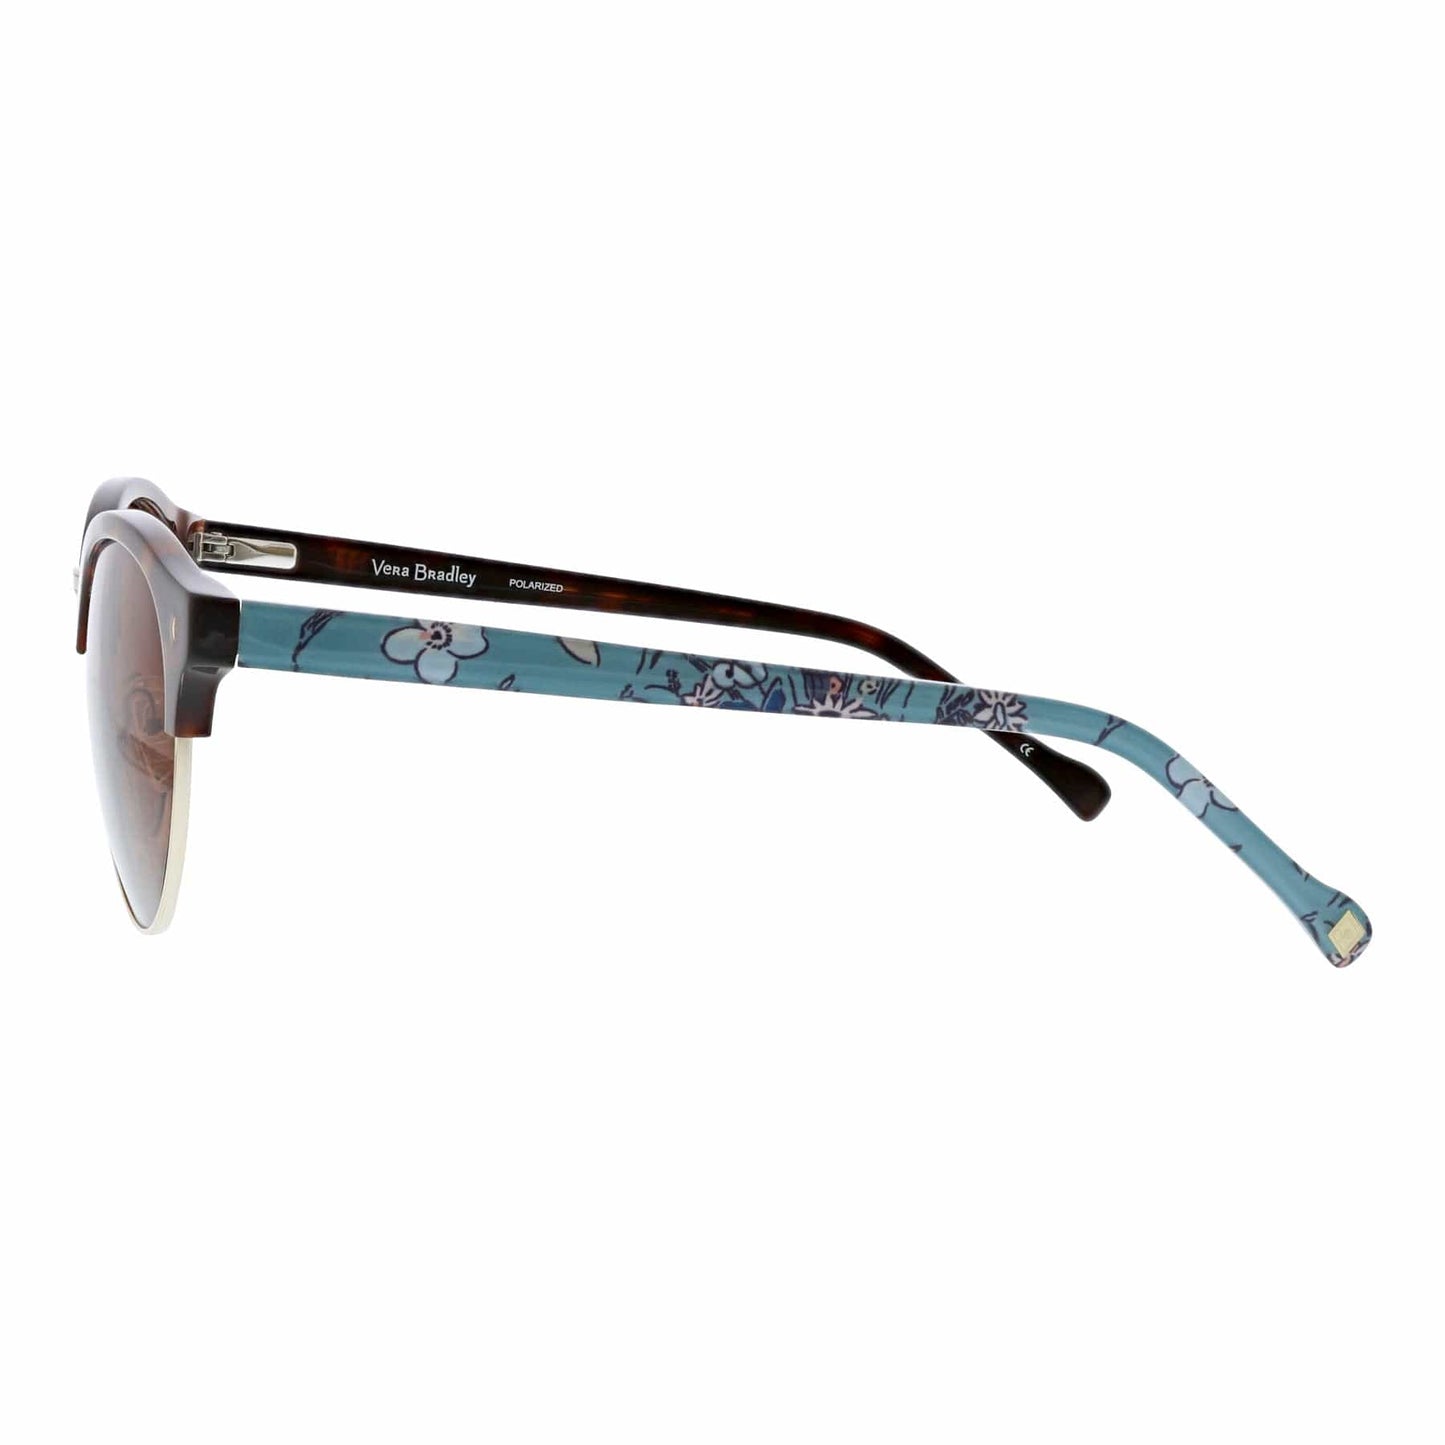 Jade Polarized Sunglasses